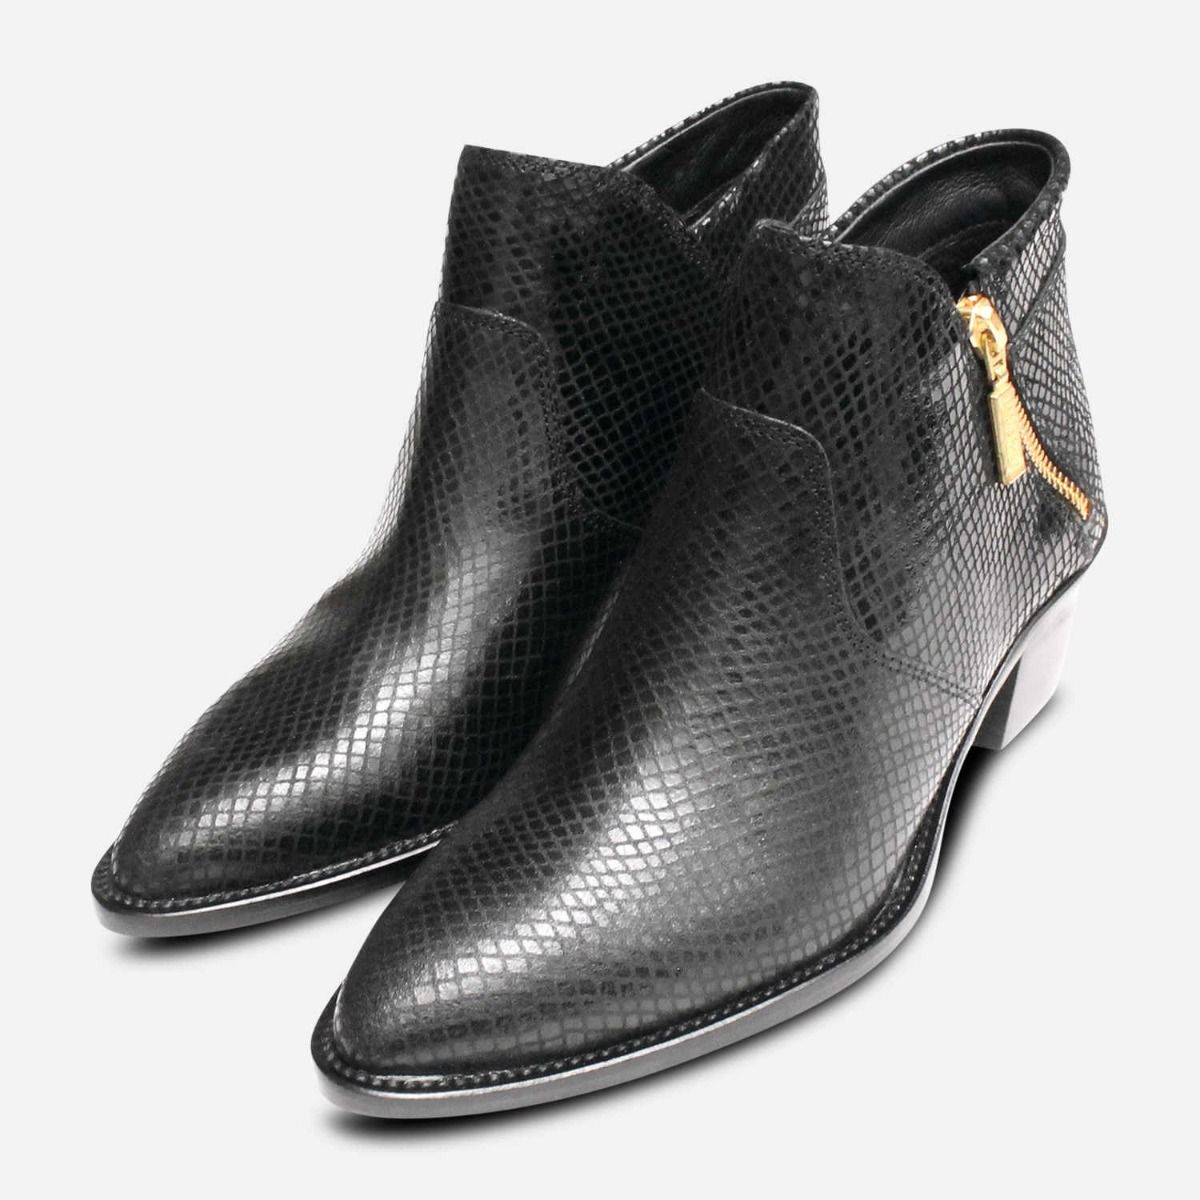 black snakeskin boots